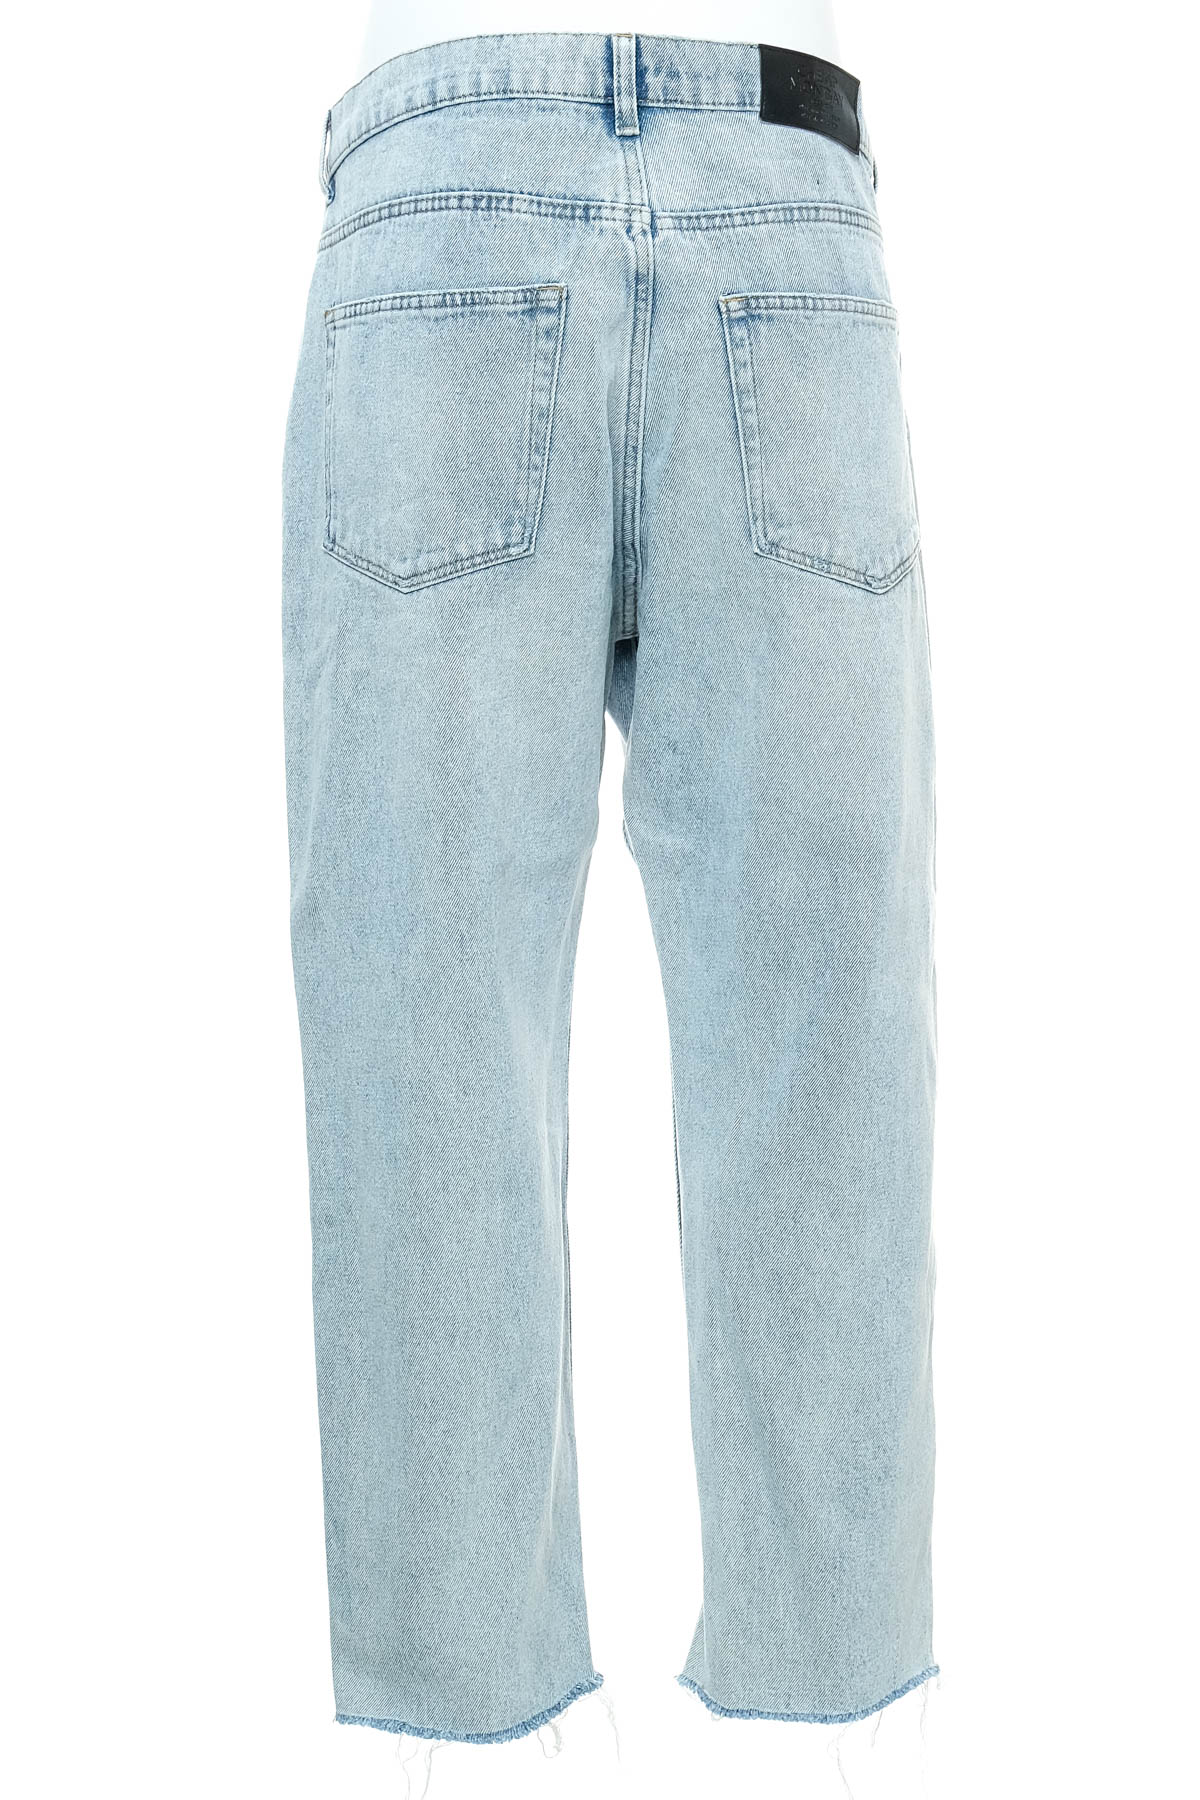 Men's jeans - Cheap Monday - 1